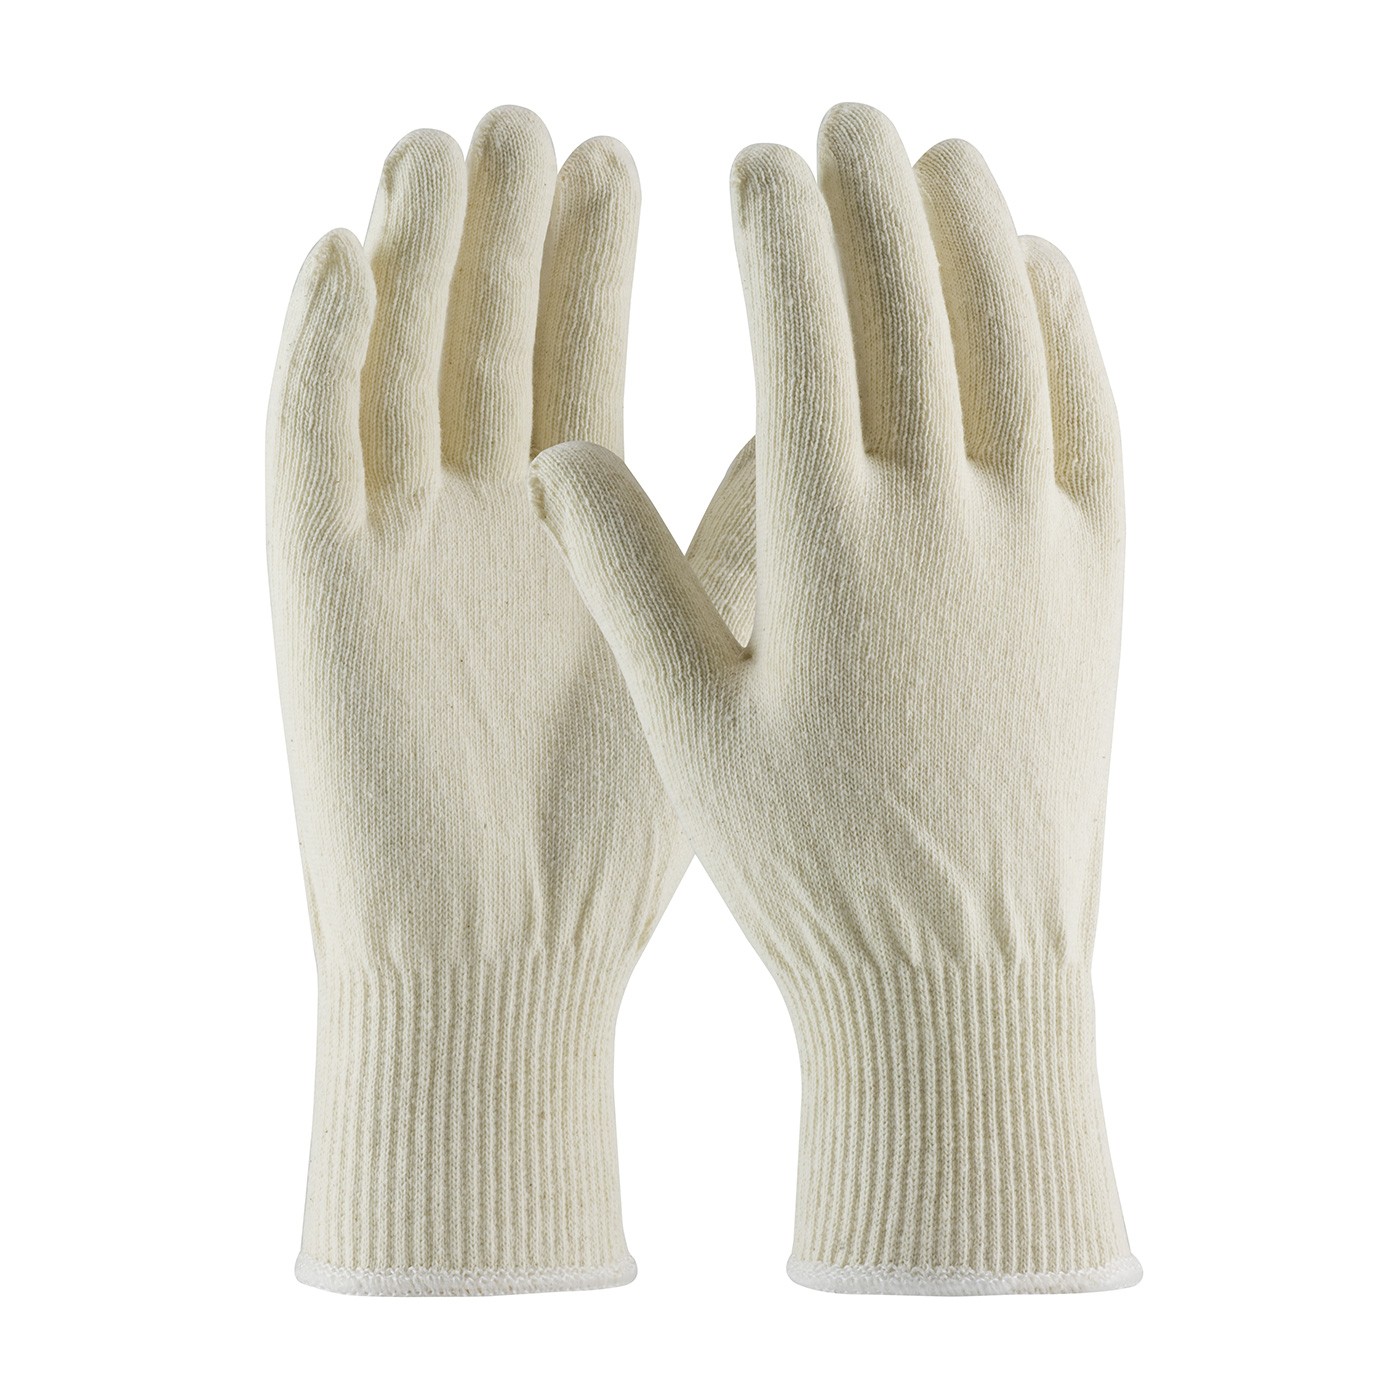  PIP® Premium Seamless Knit Cotton / Polyester Glove - 13 Gauge  (#K713S)